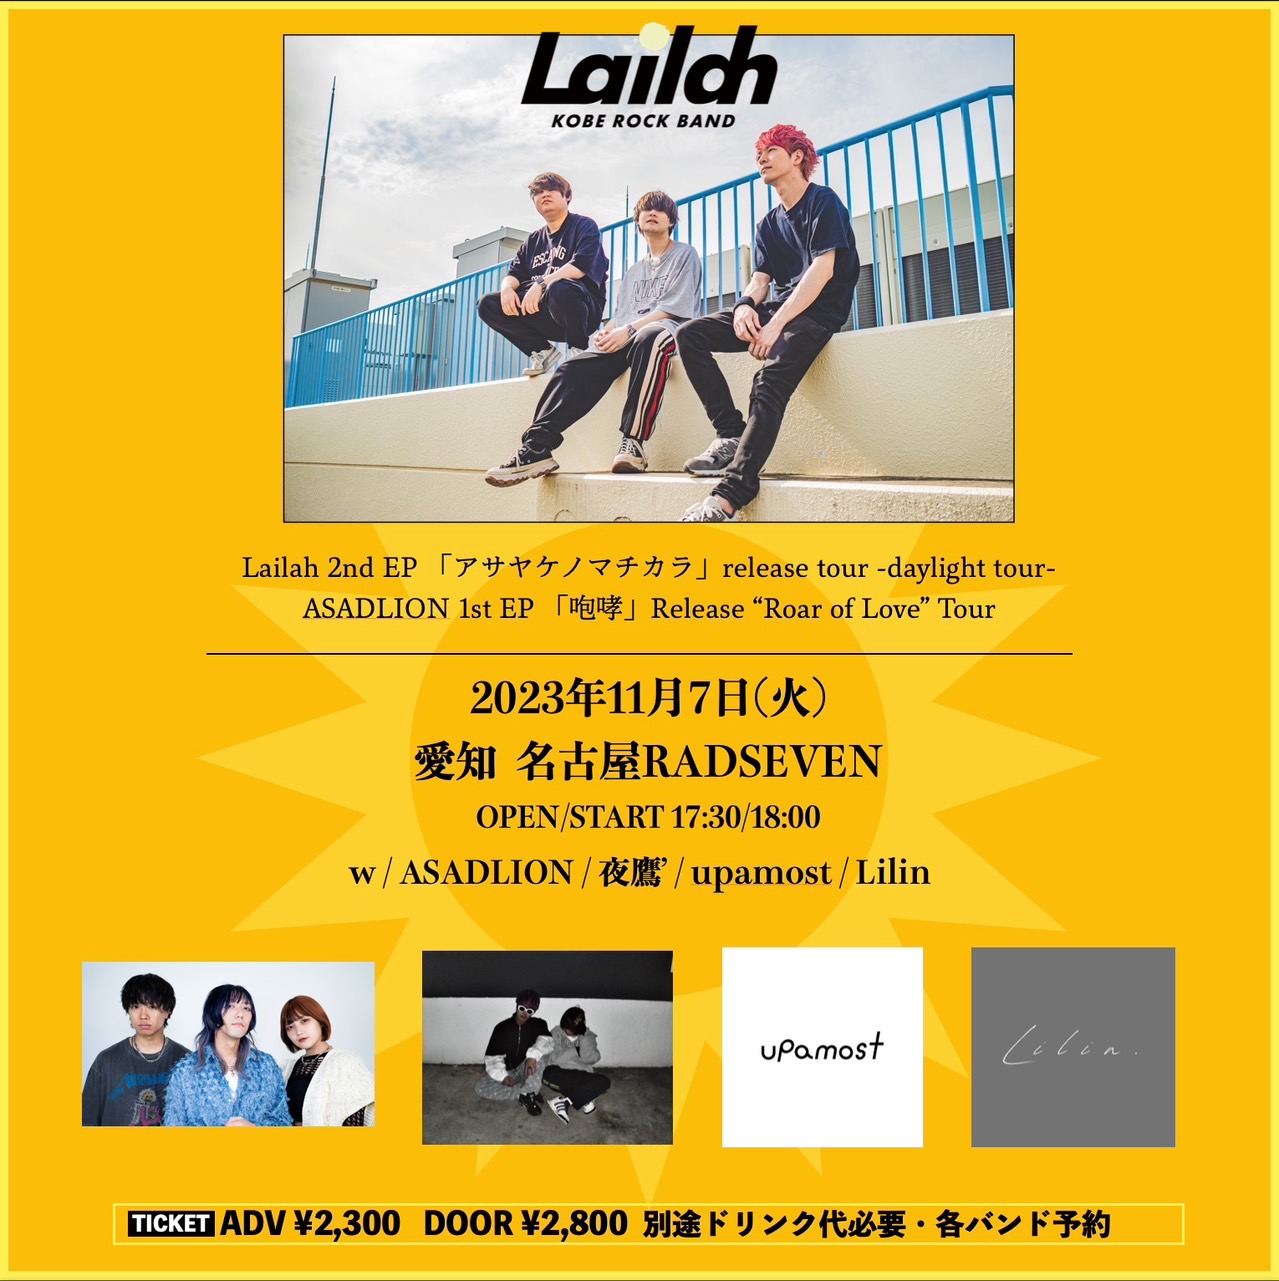 Lailah 2nd EP 「アサヤケノマチカラ」release tour -daylight tour-